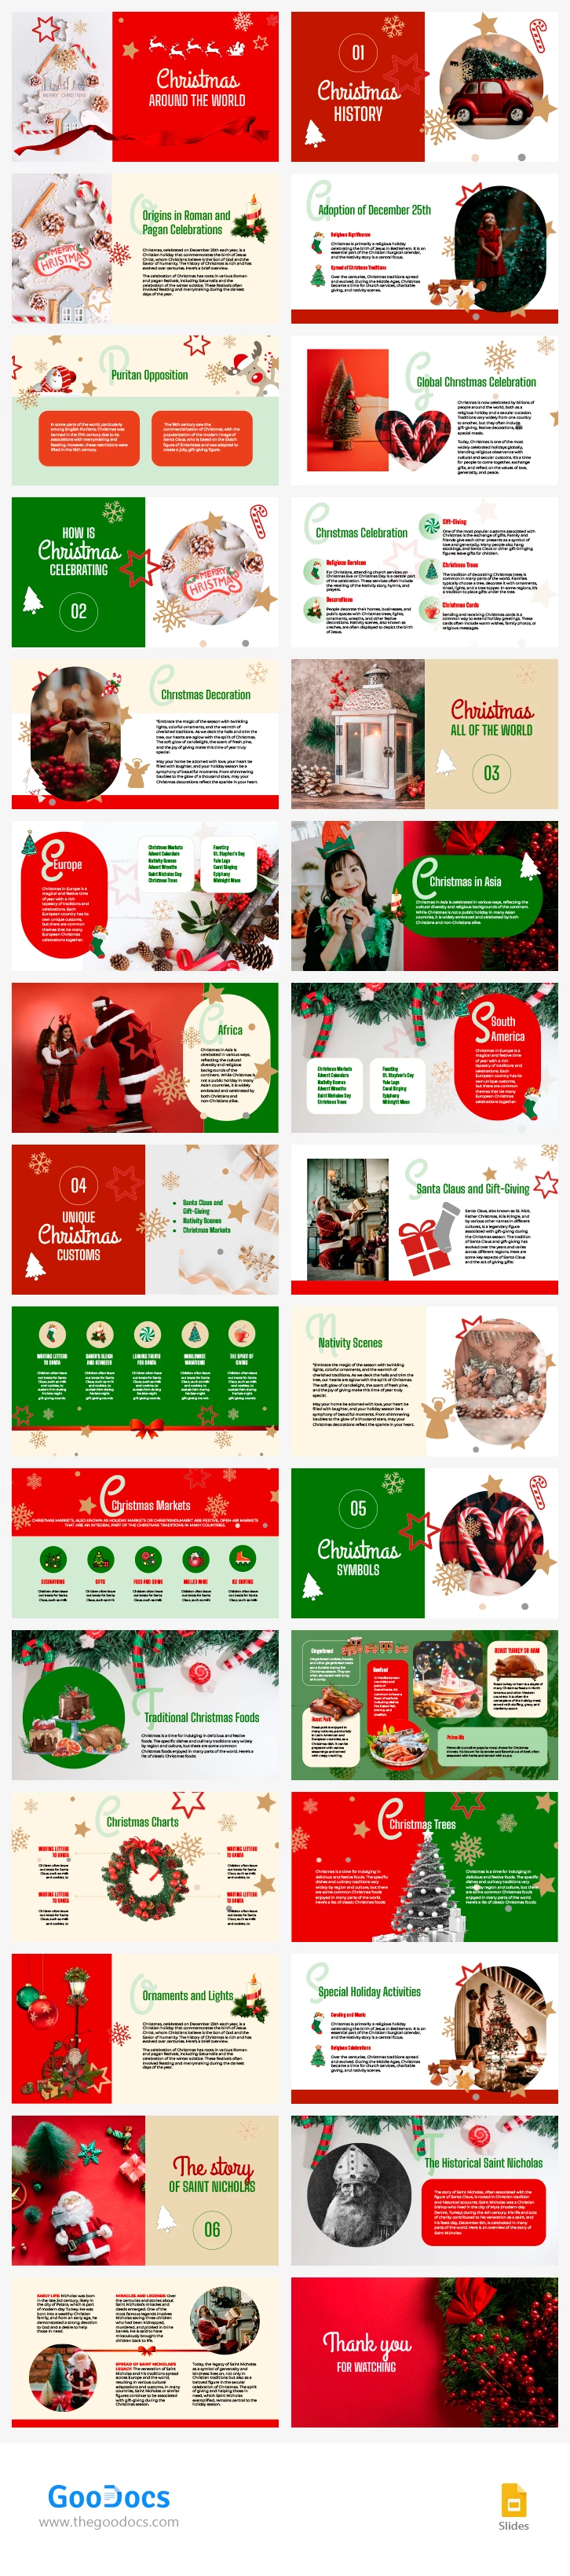 Christmas Around the World - free Google Docs Template - 10067303